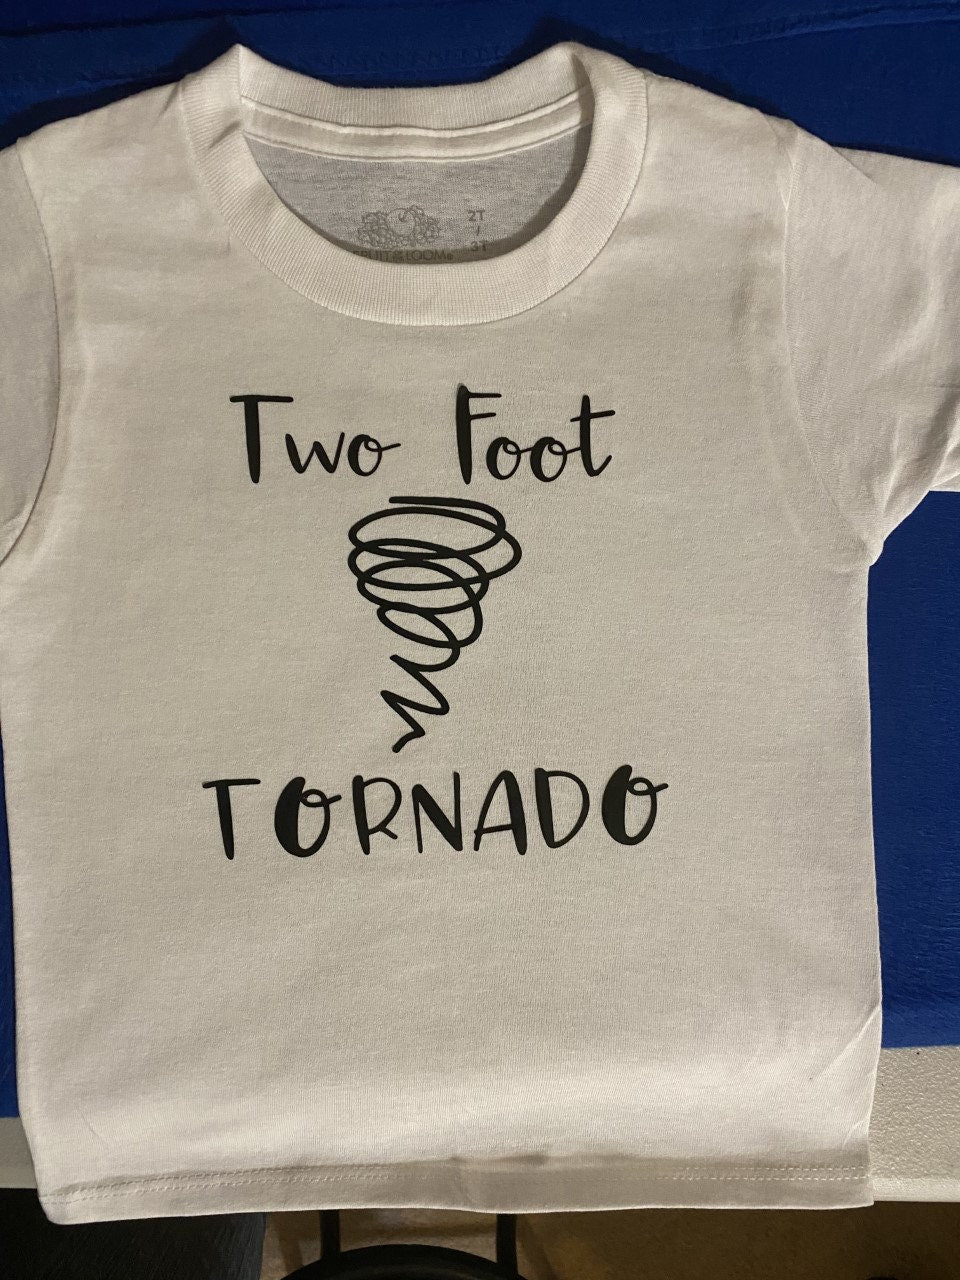 Two Foot Tornado / funny toddler shirt / funny kids shirt / funny shirt / funny tornado / kids shirt / toddler shirt / funny kids shirt